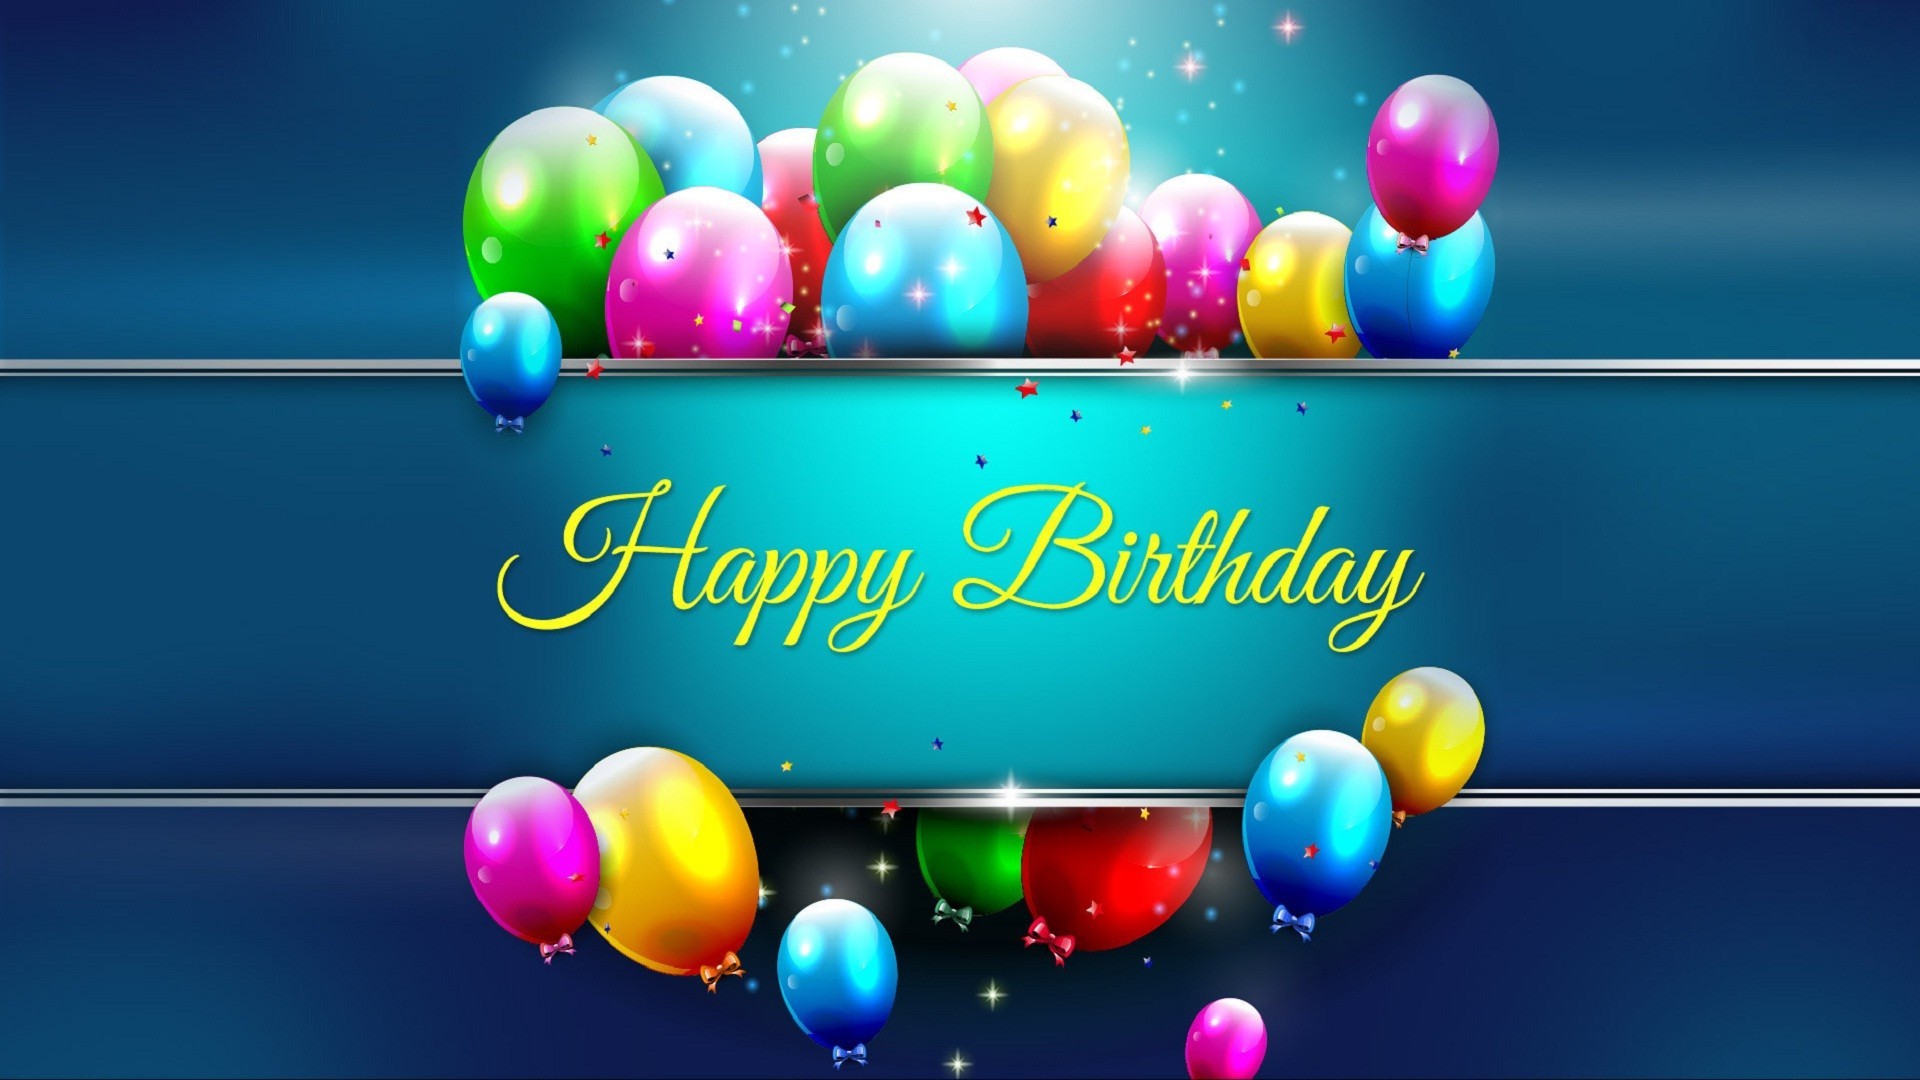 1920x1080, Most Popular Happy Birthday Wallpaper 720p - Happy Birthday  Balloon Images Hd - 1920x1080 Wallpaper 